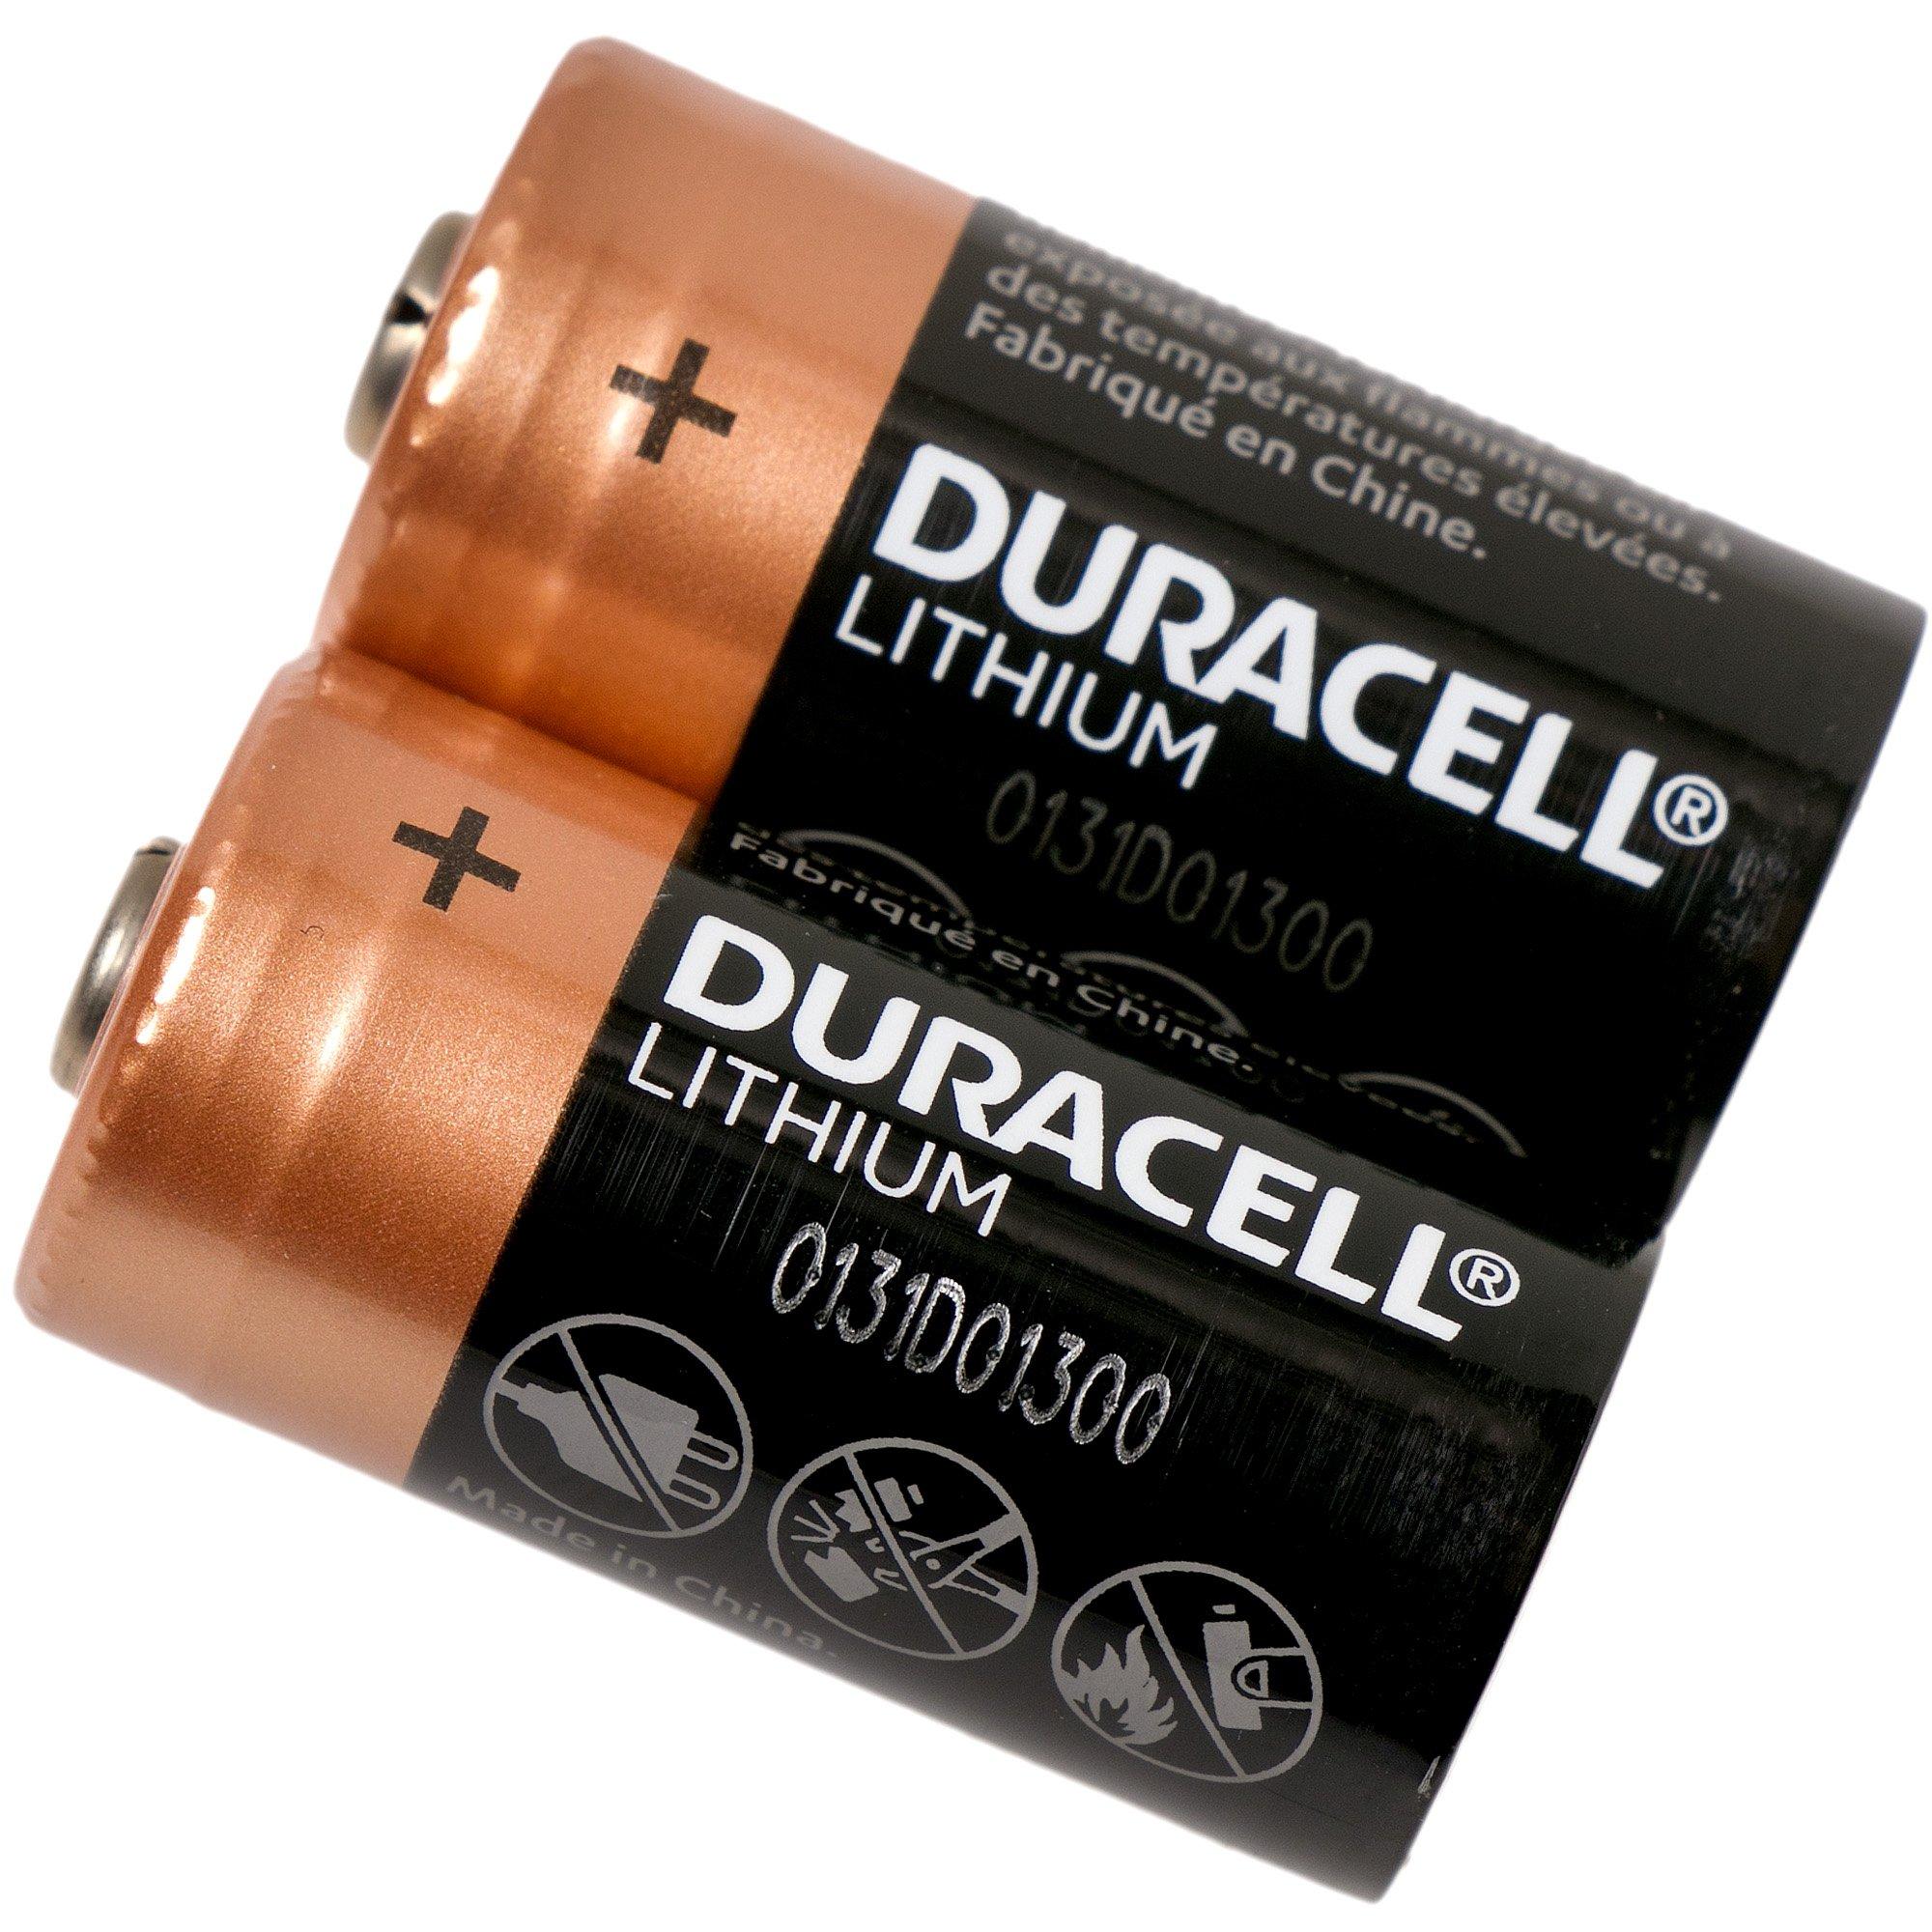 Duracell CR123A battery, set of 2 pcs.  Advantageously shopping at